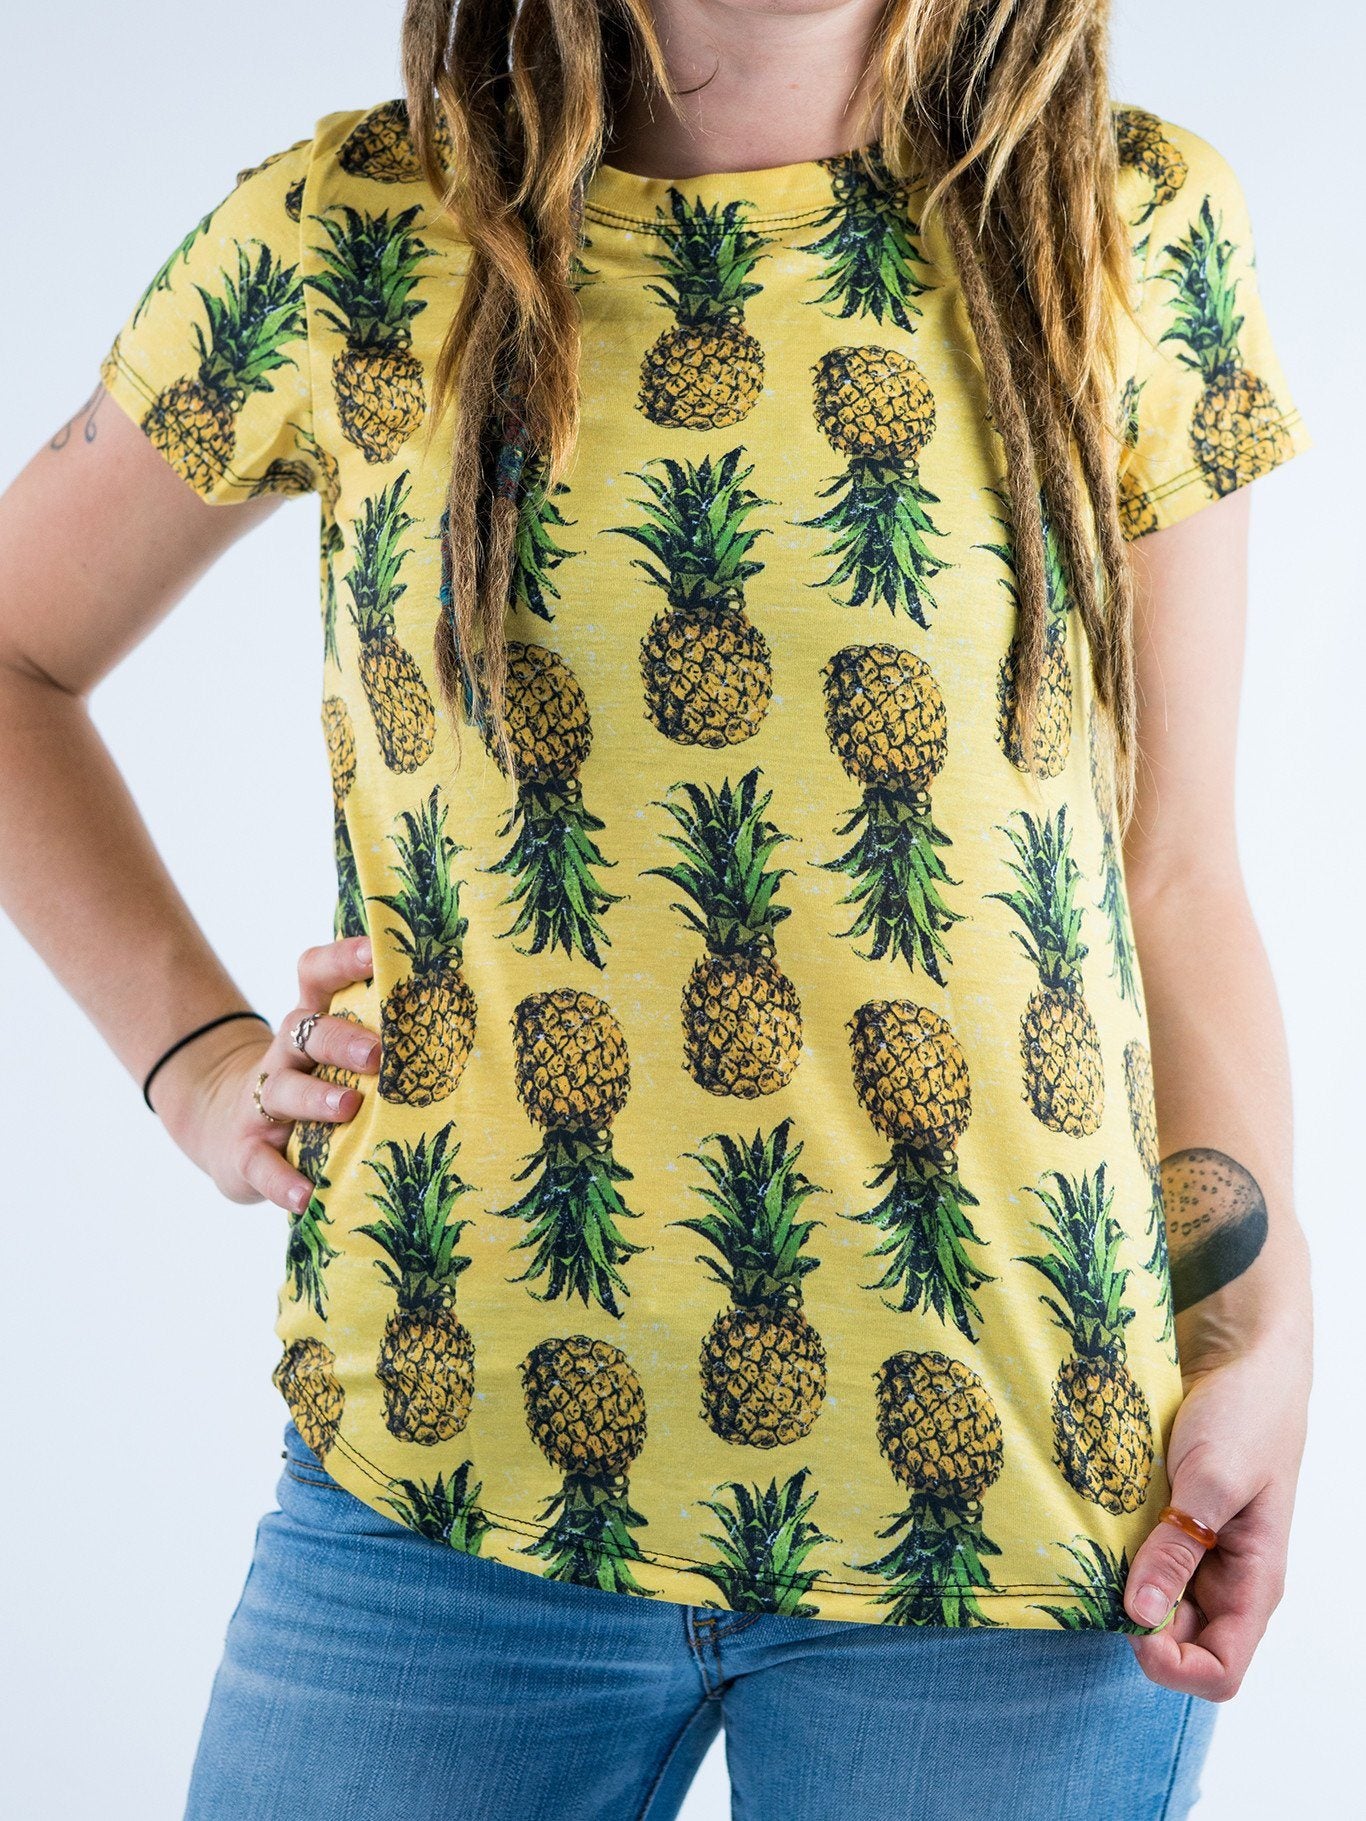 Pineapple Women's Crew T-Shirts T6 